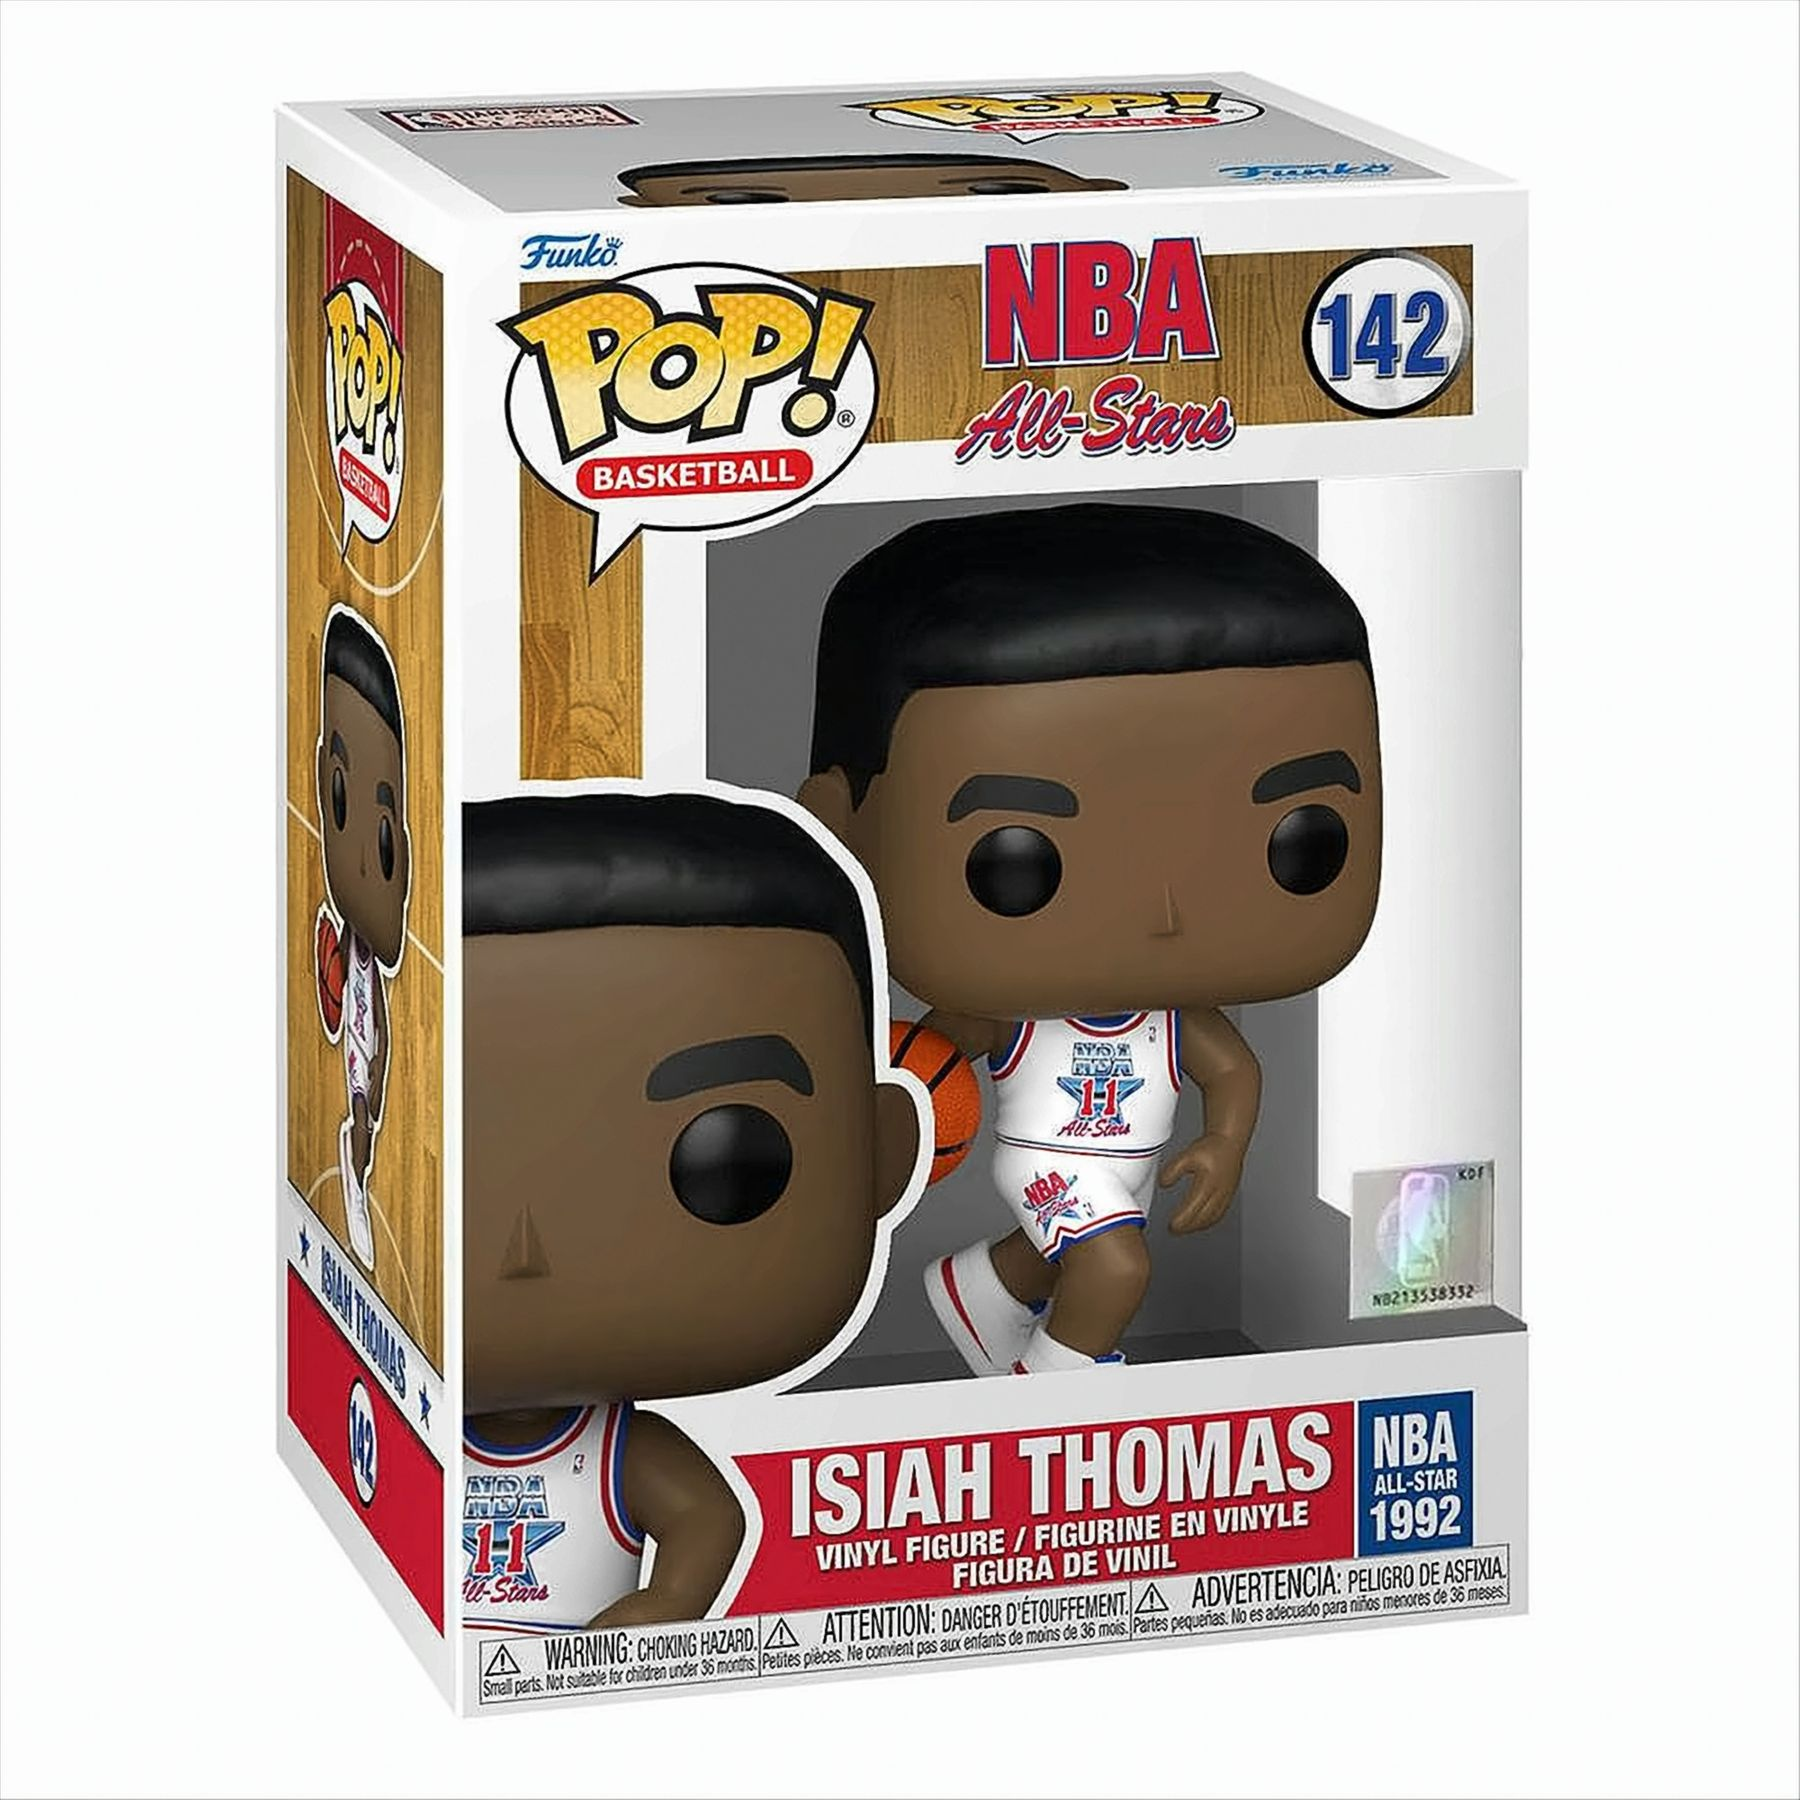 - NBA Legends Stars - - Thomas/All POP Isiah NBA